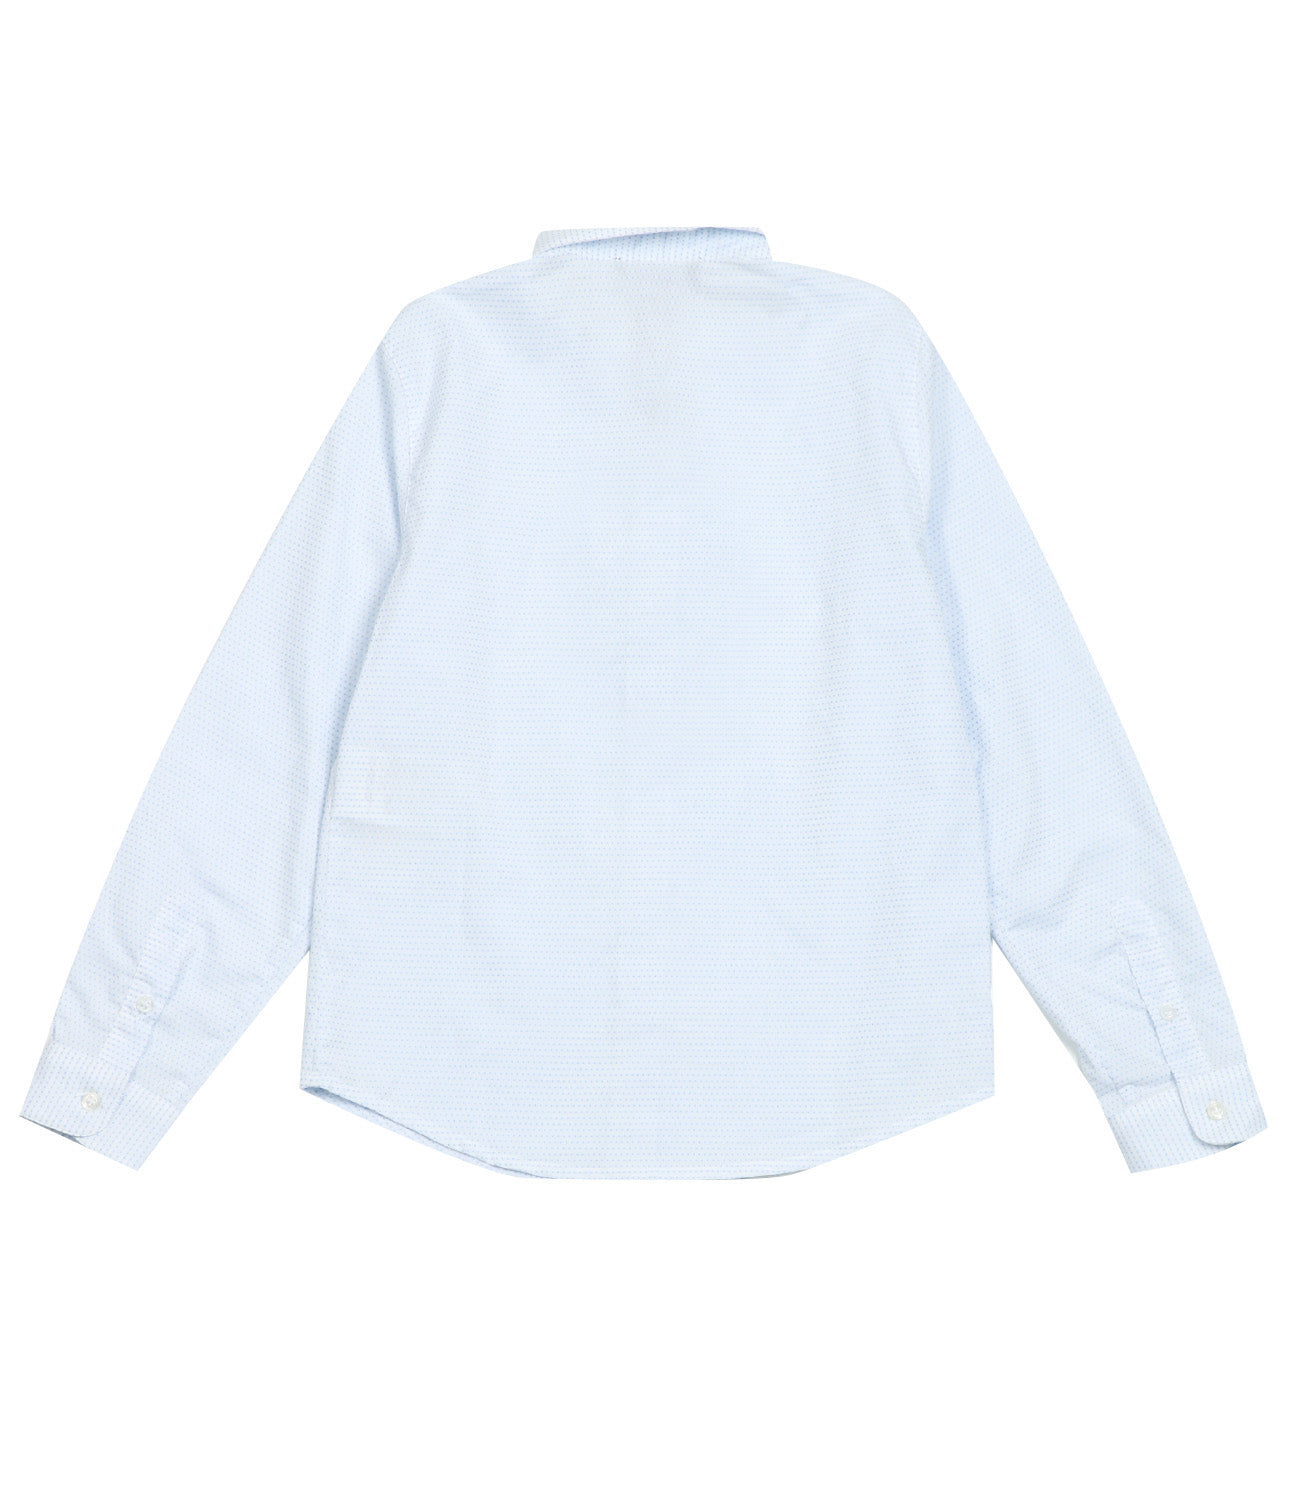 Emporio Armani Junior | White Shirt